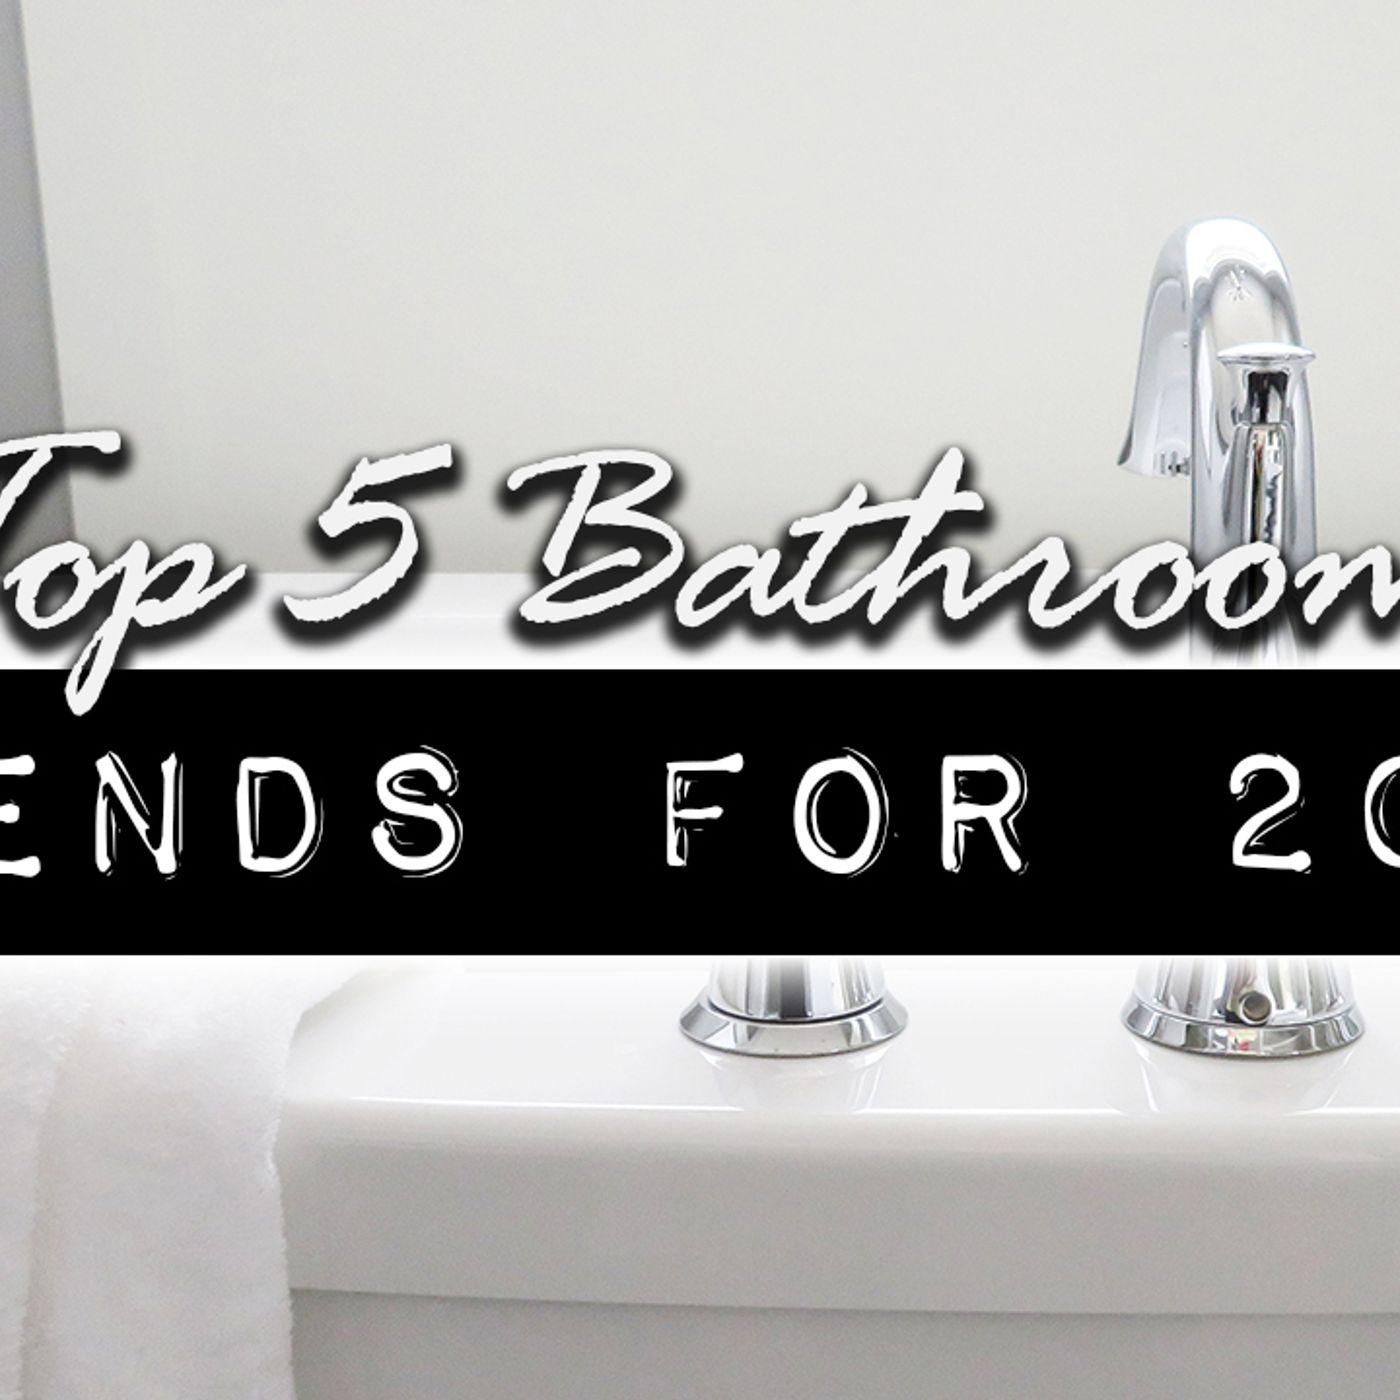 Top 5 Bathroom Trends 2018 | Home Improvement Podcast